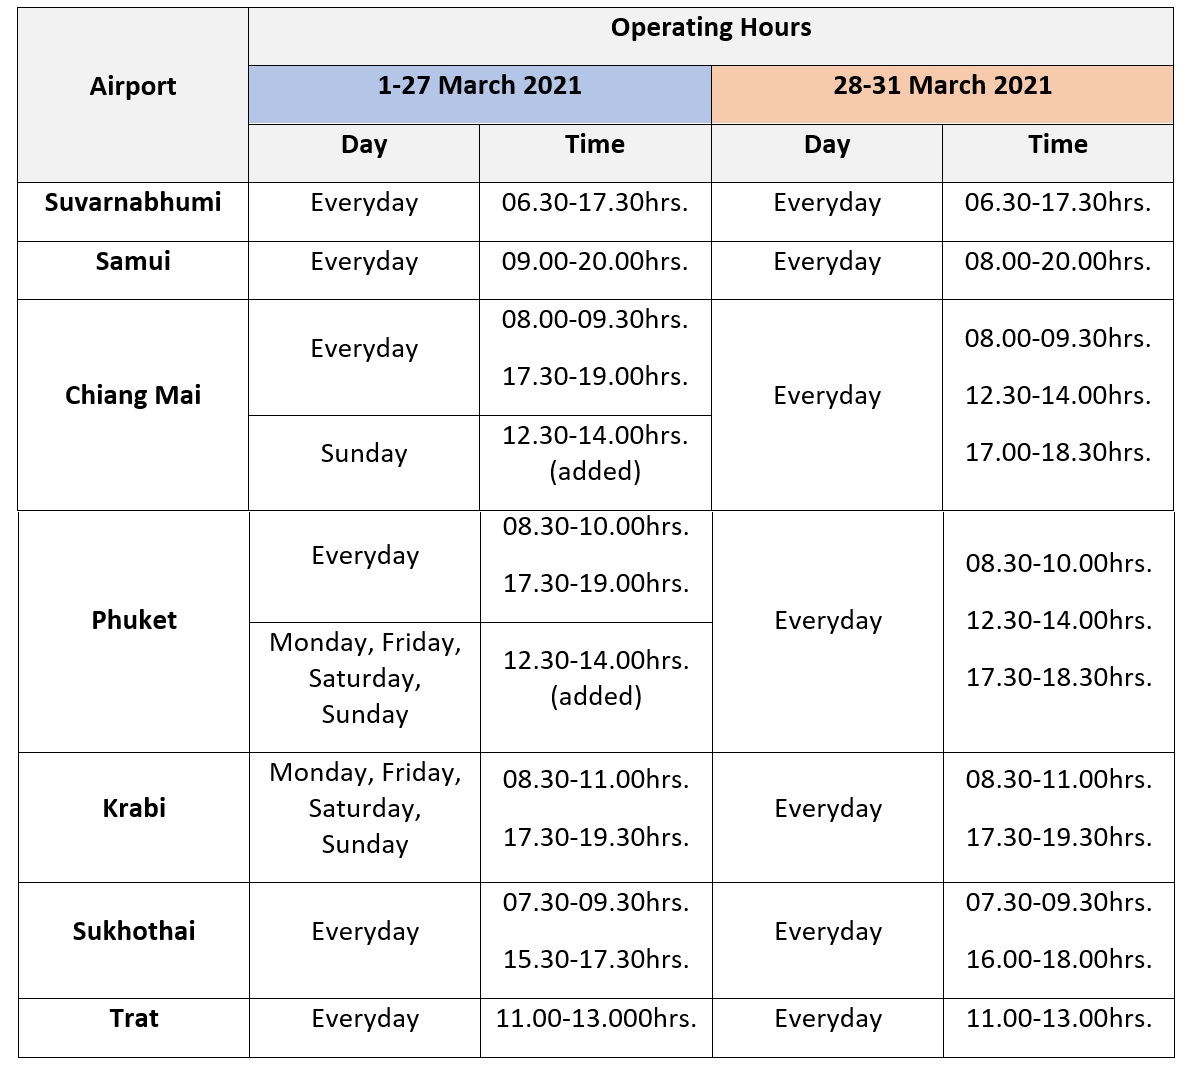 Bangkok Airways has announced that it will reopen its passenger lounges and F&B kiosk services at Suvarnabhumi Airport (BKK), Chiang Mai (CNX), Phuket (HKT), Krabi (KBV), Samui (USM), Sukhothai (THS) and Trat (TDX) airports.